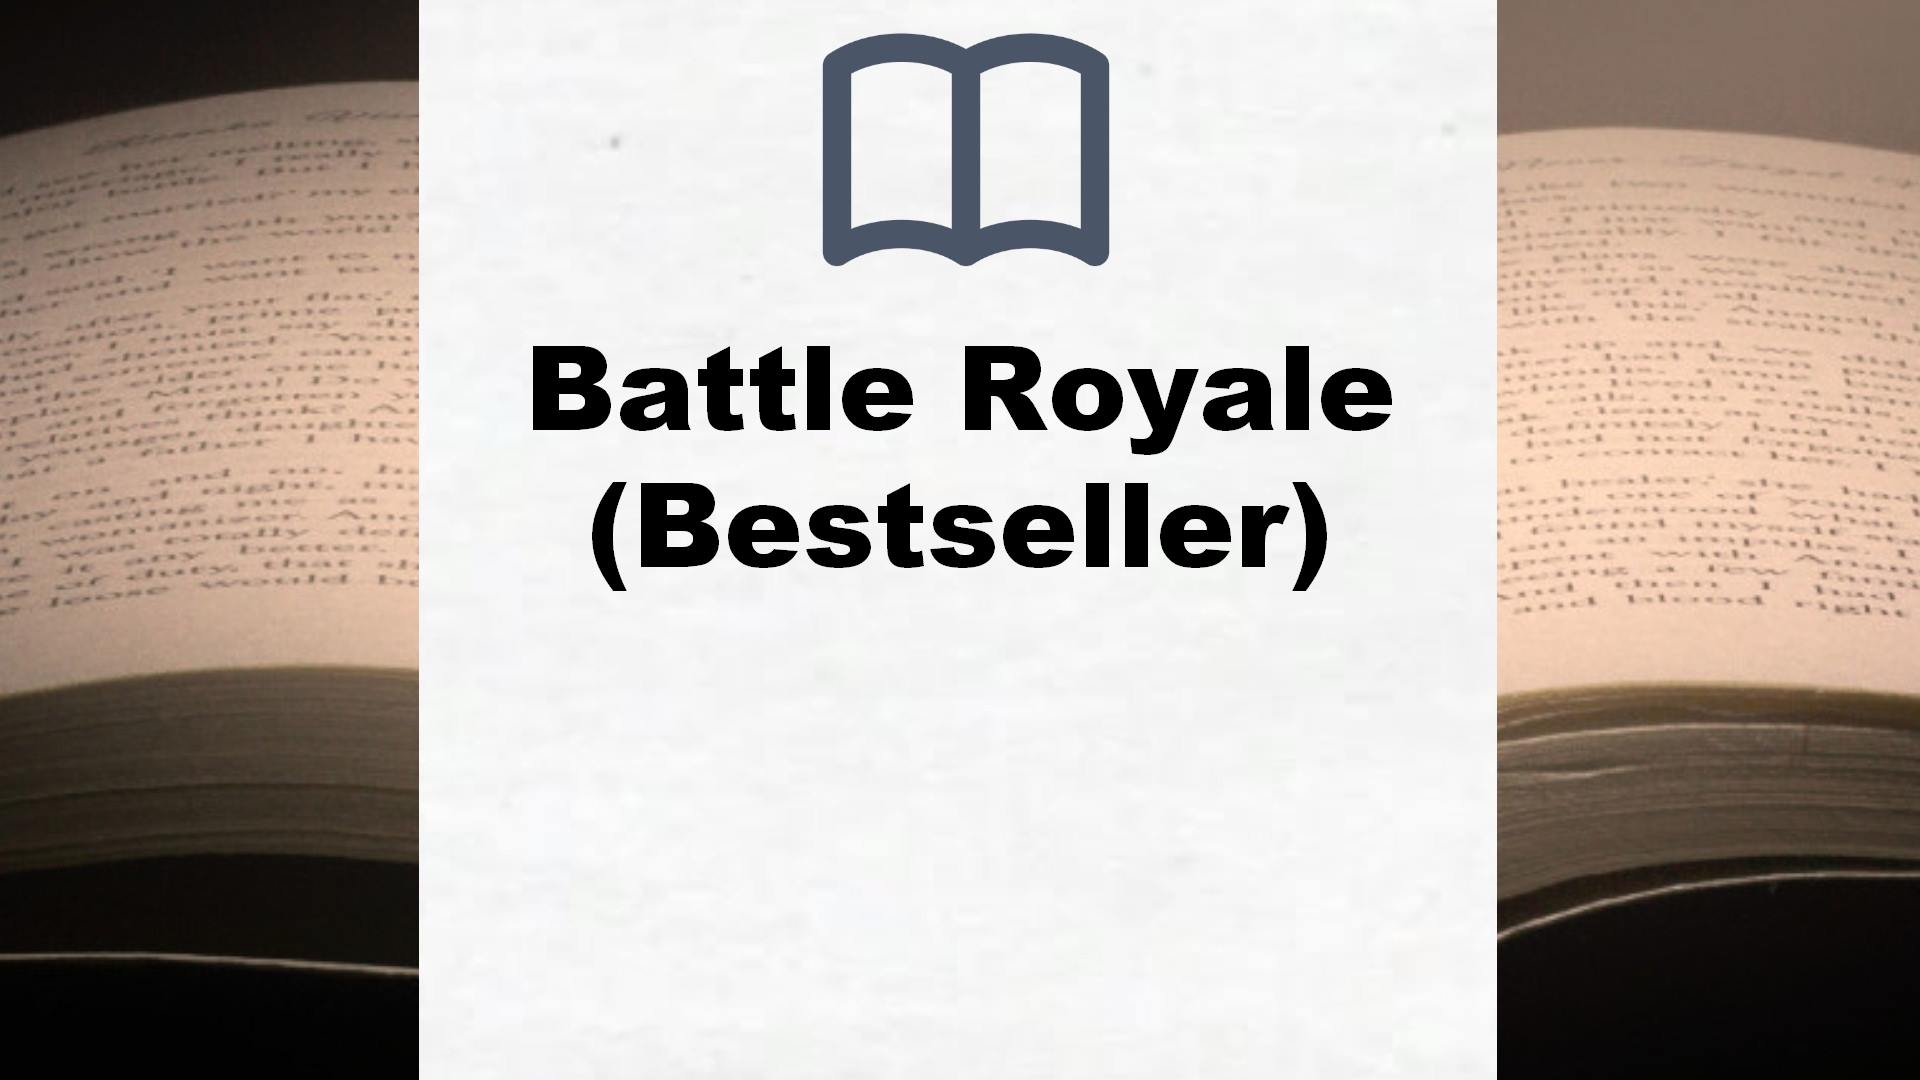 Battle Royale (Bestseller) – Reseña del libro